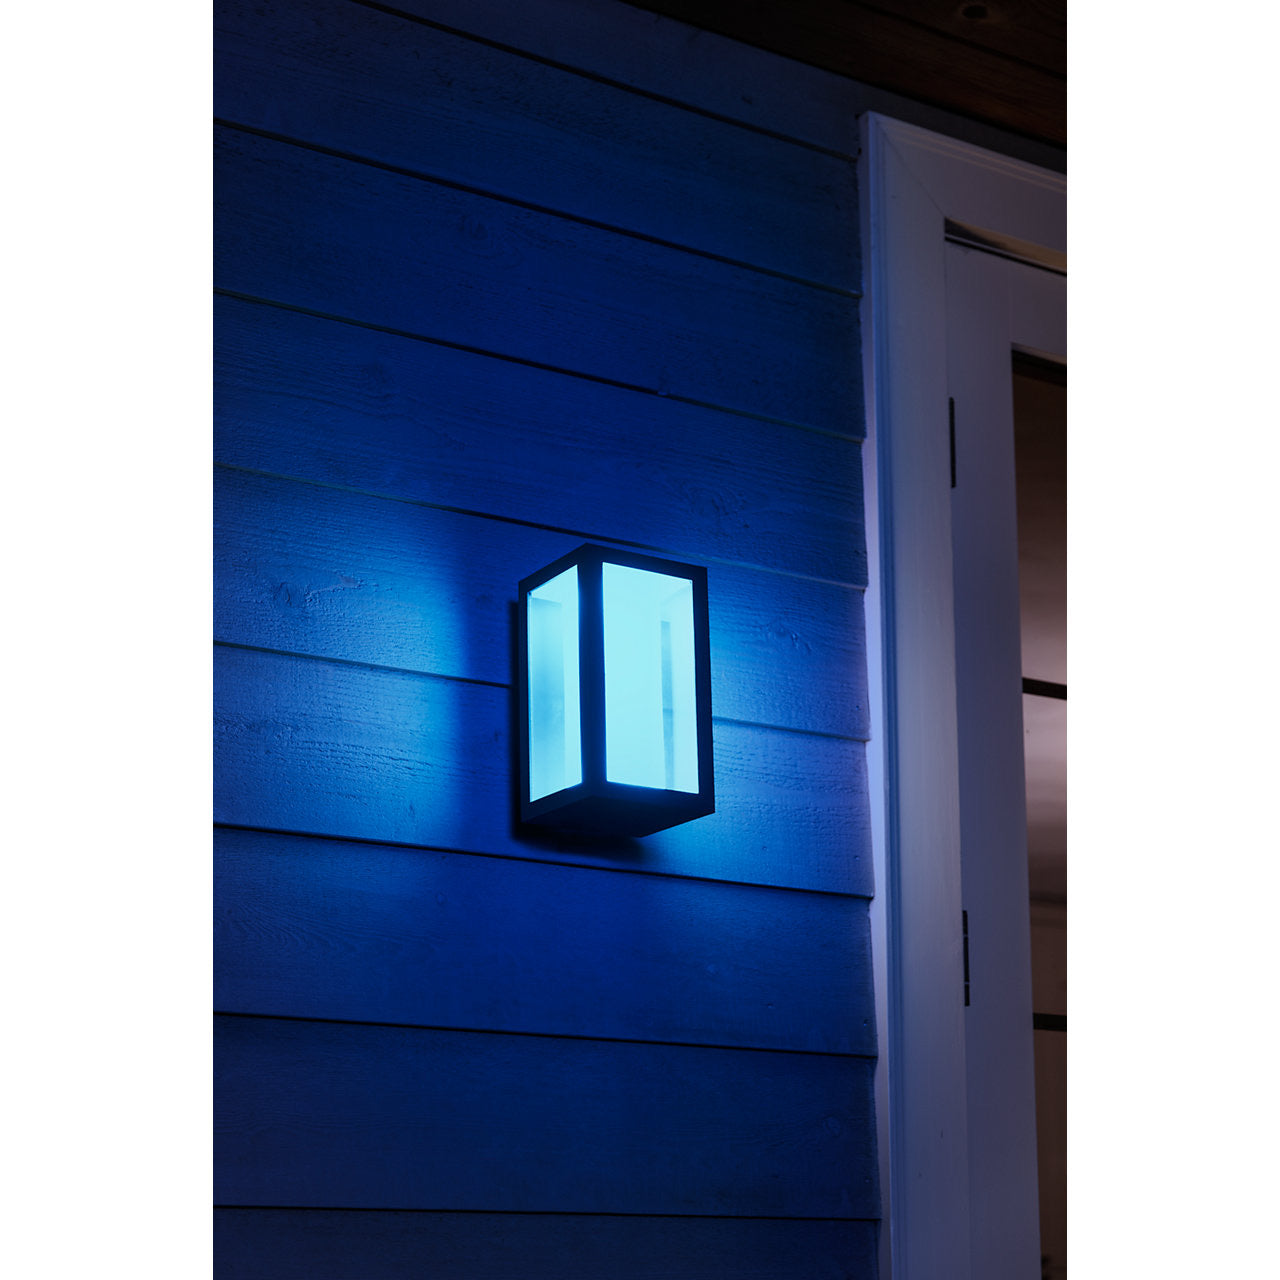 Hue Impress wall lantern with blue set